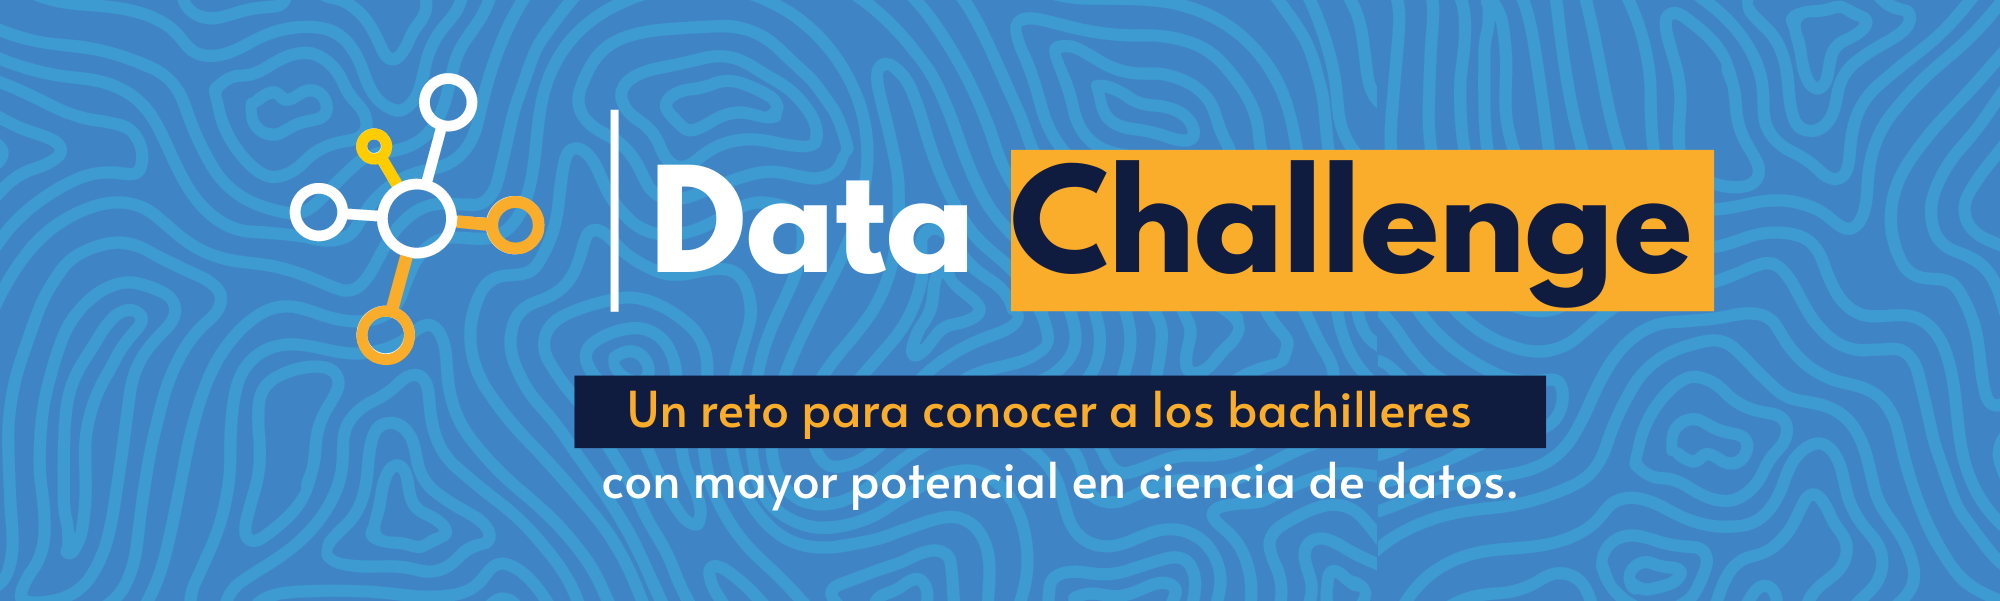 Data Challenge bachiller (1).png